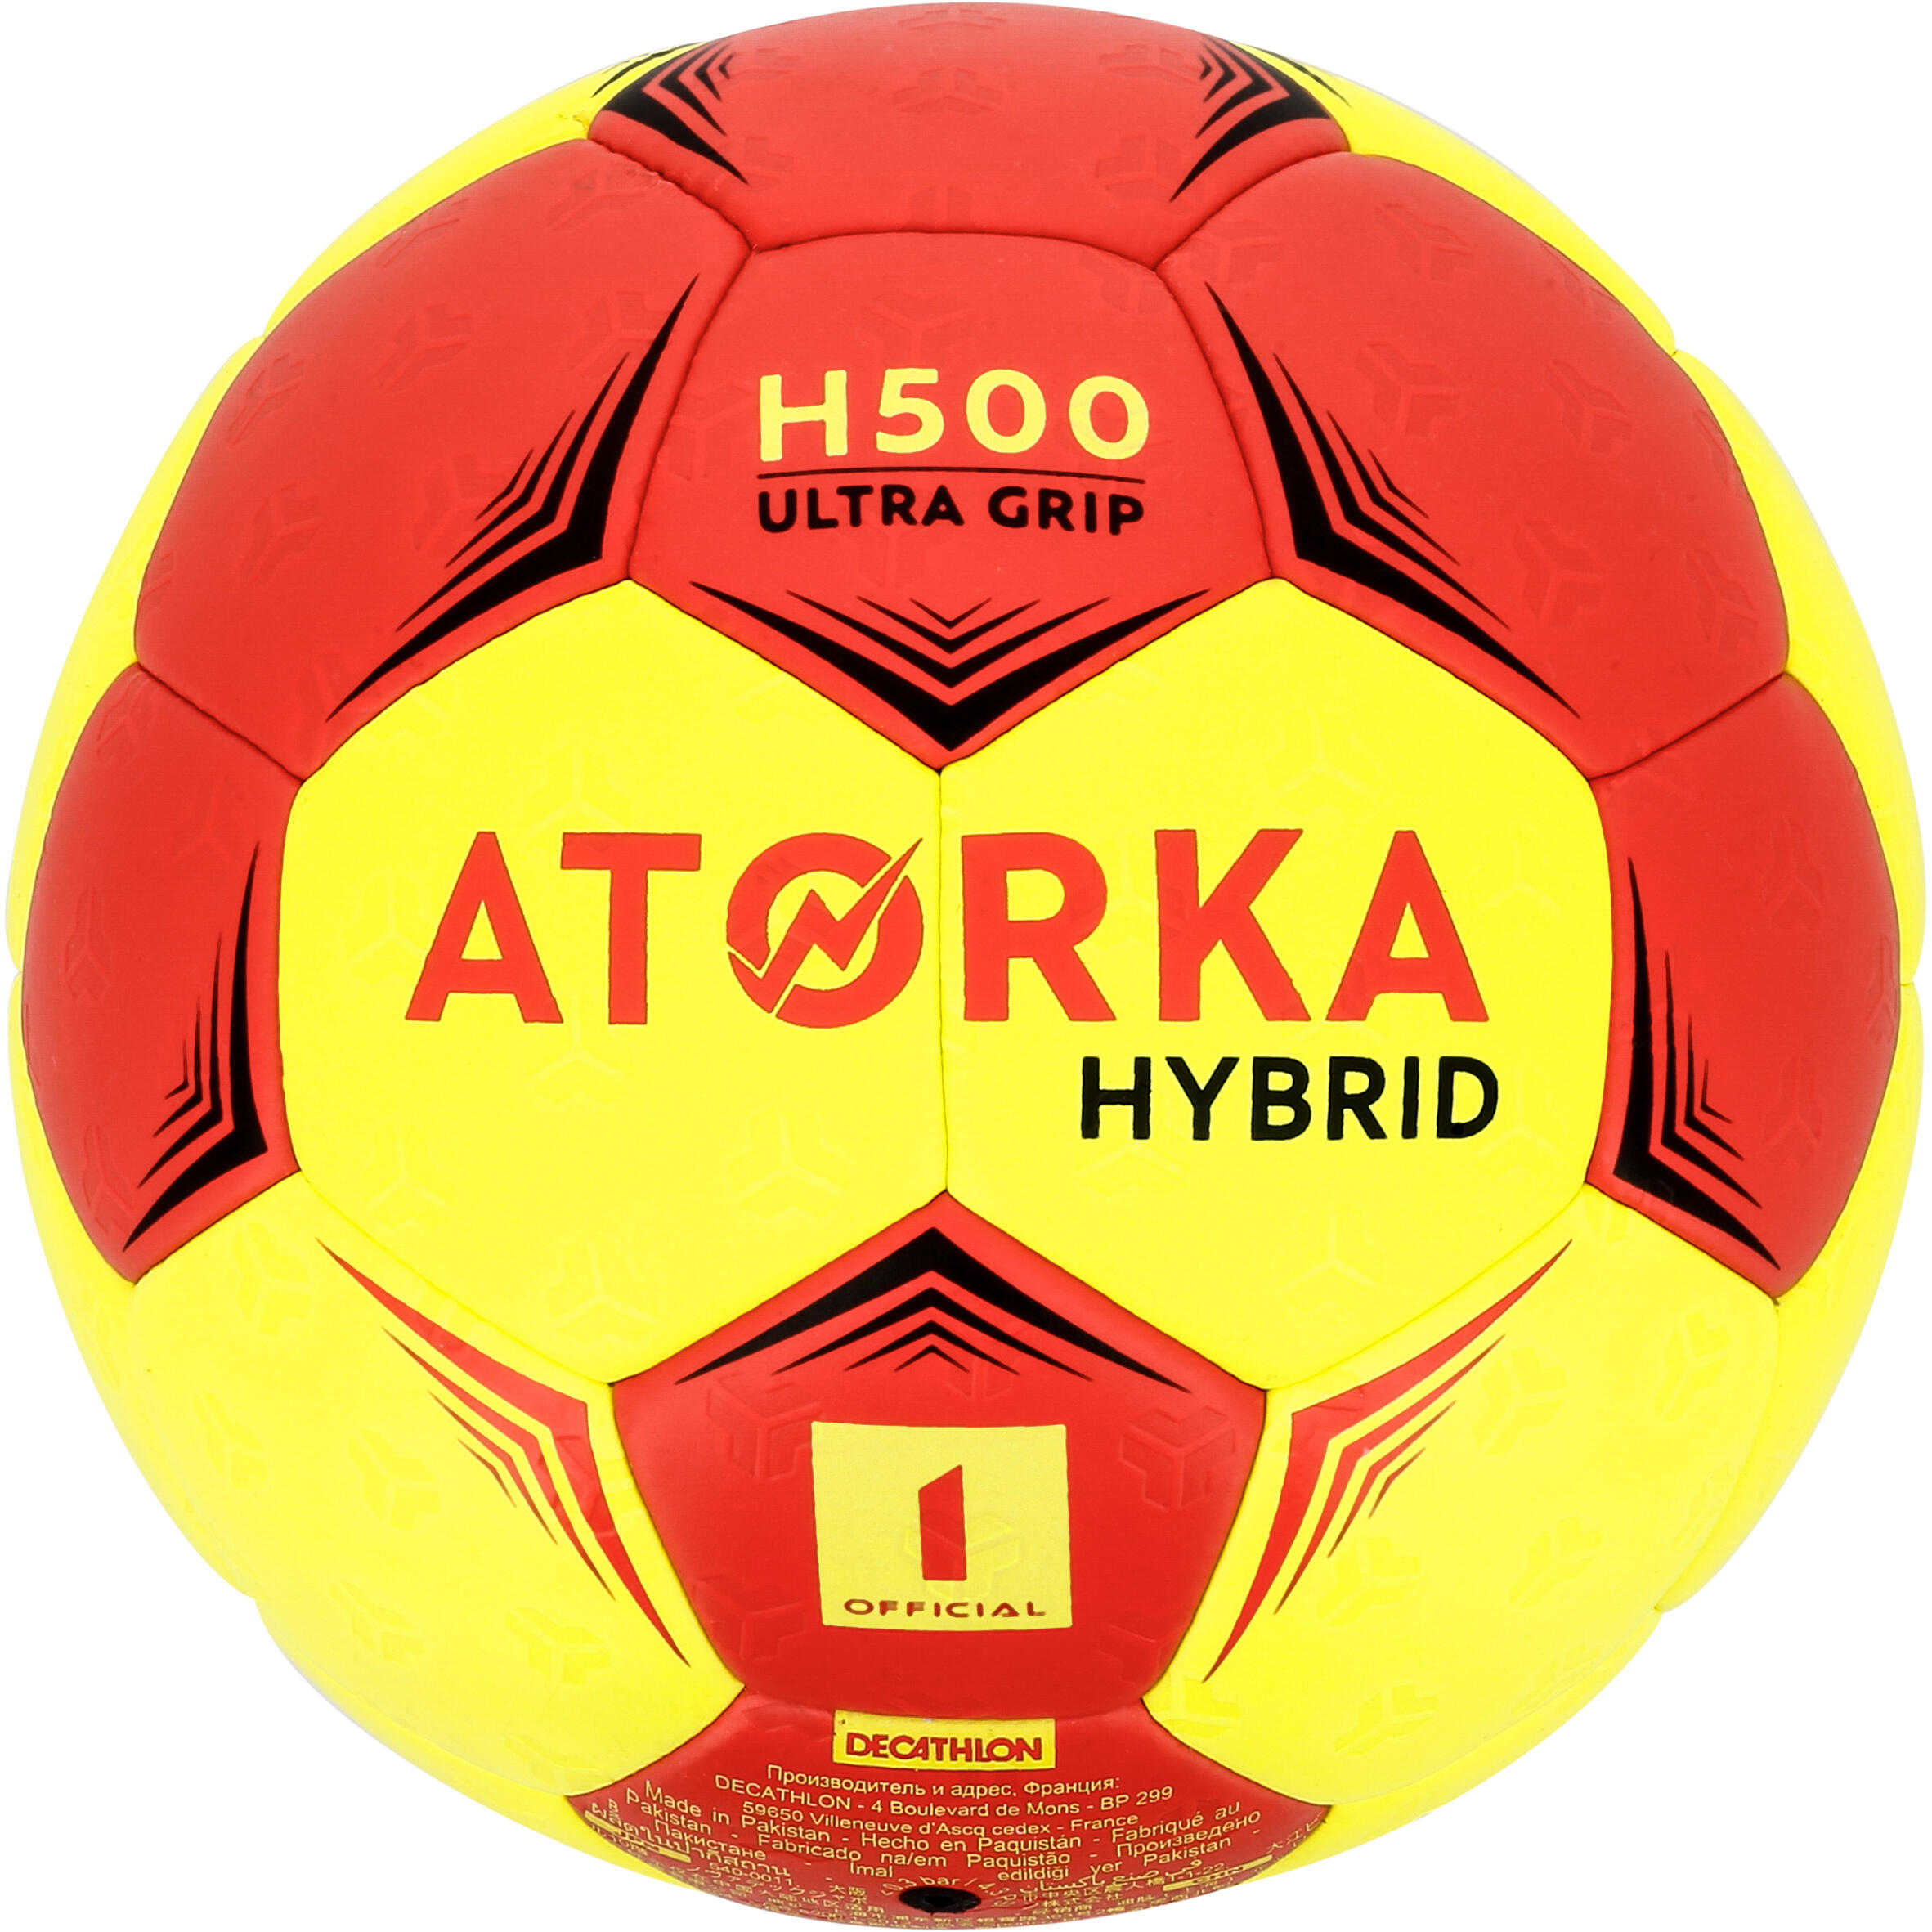 H500 Hybrid Handball Size 2 ATORKA 